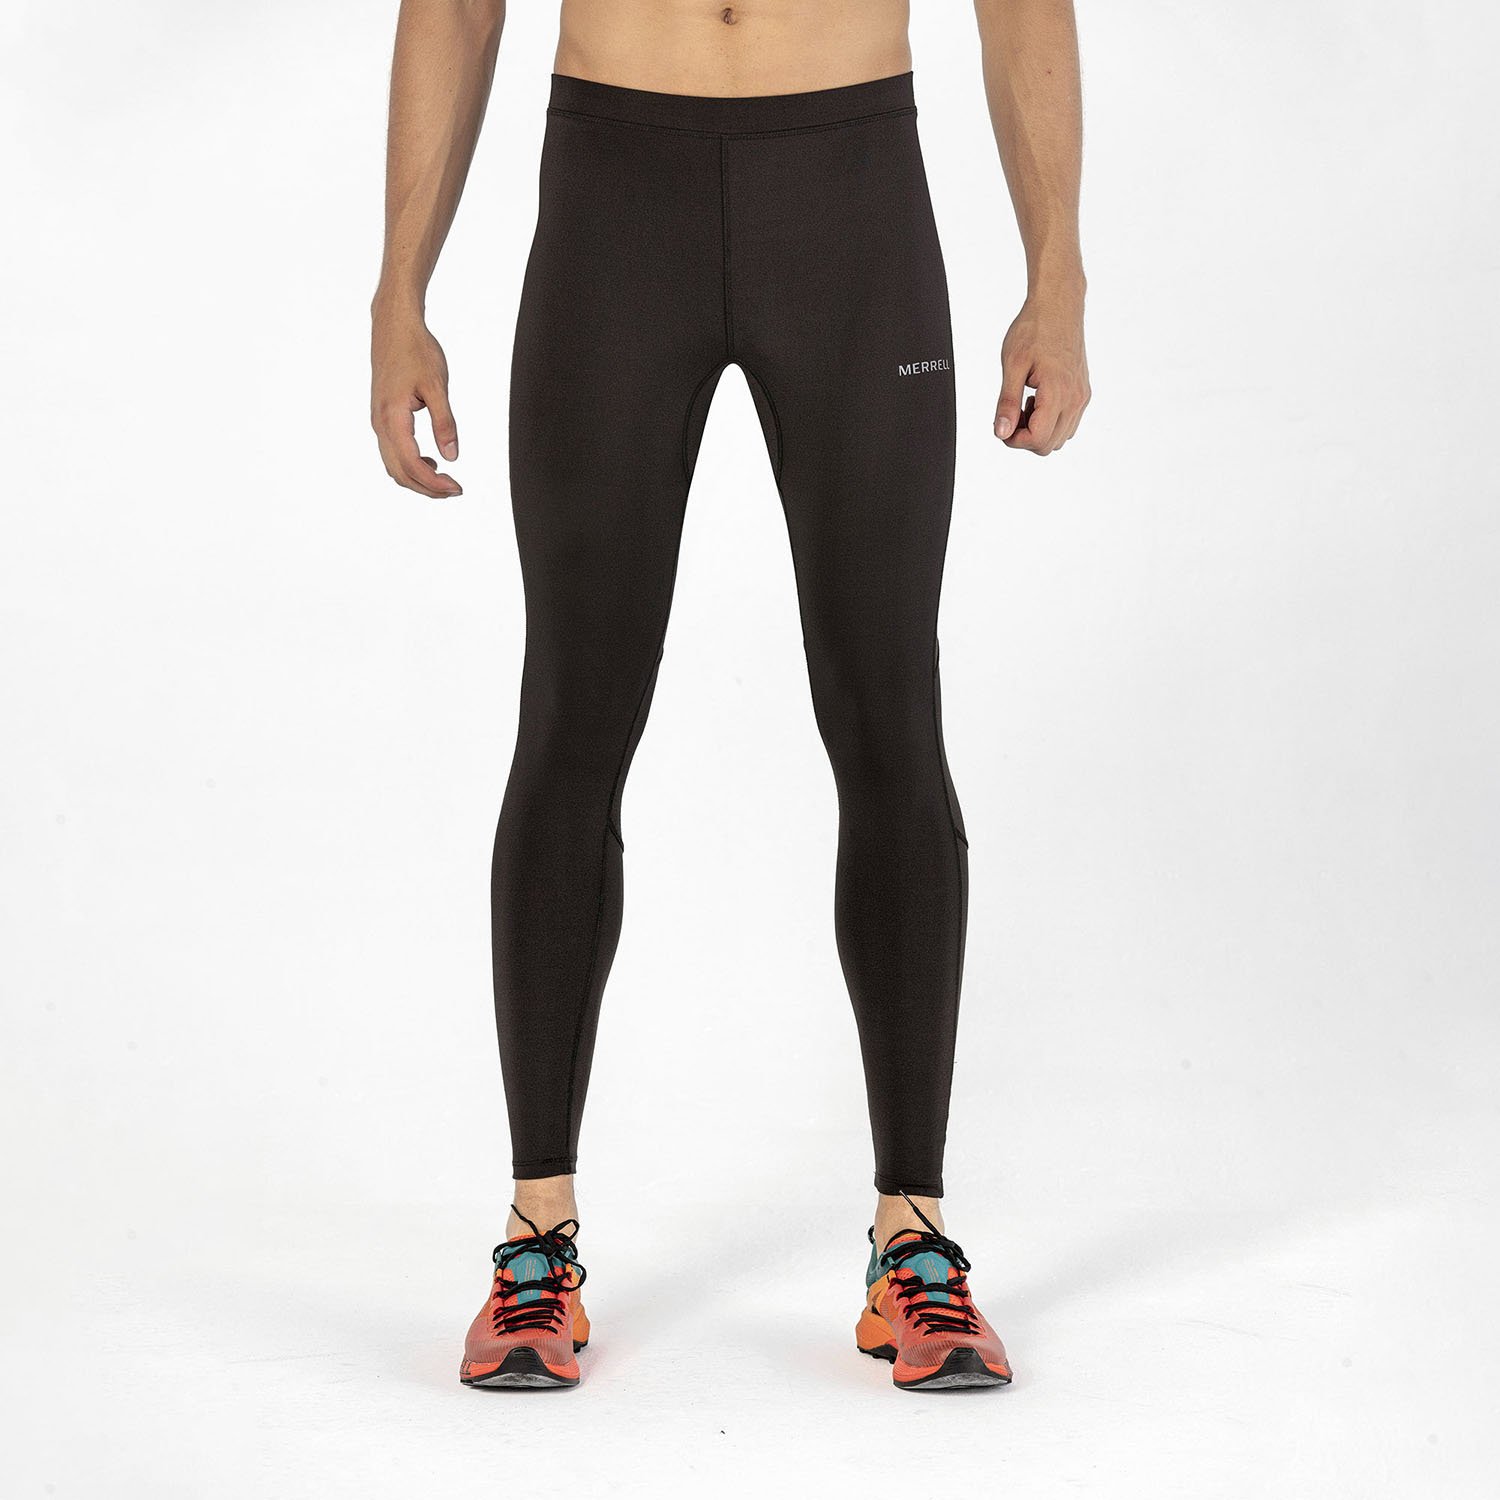 Erkek Tayt, Koşu Taytı & Spor Tayt Modelleri - Spor Giyim